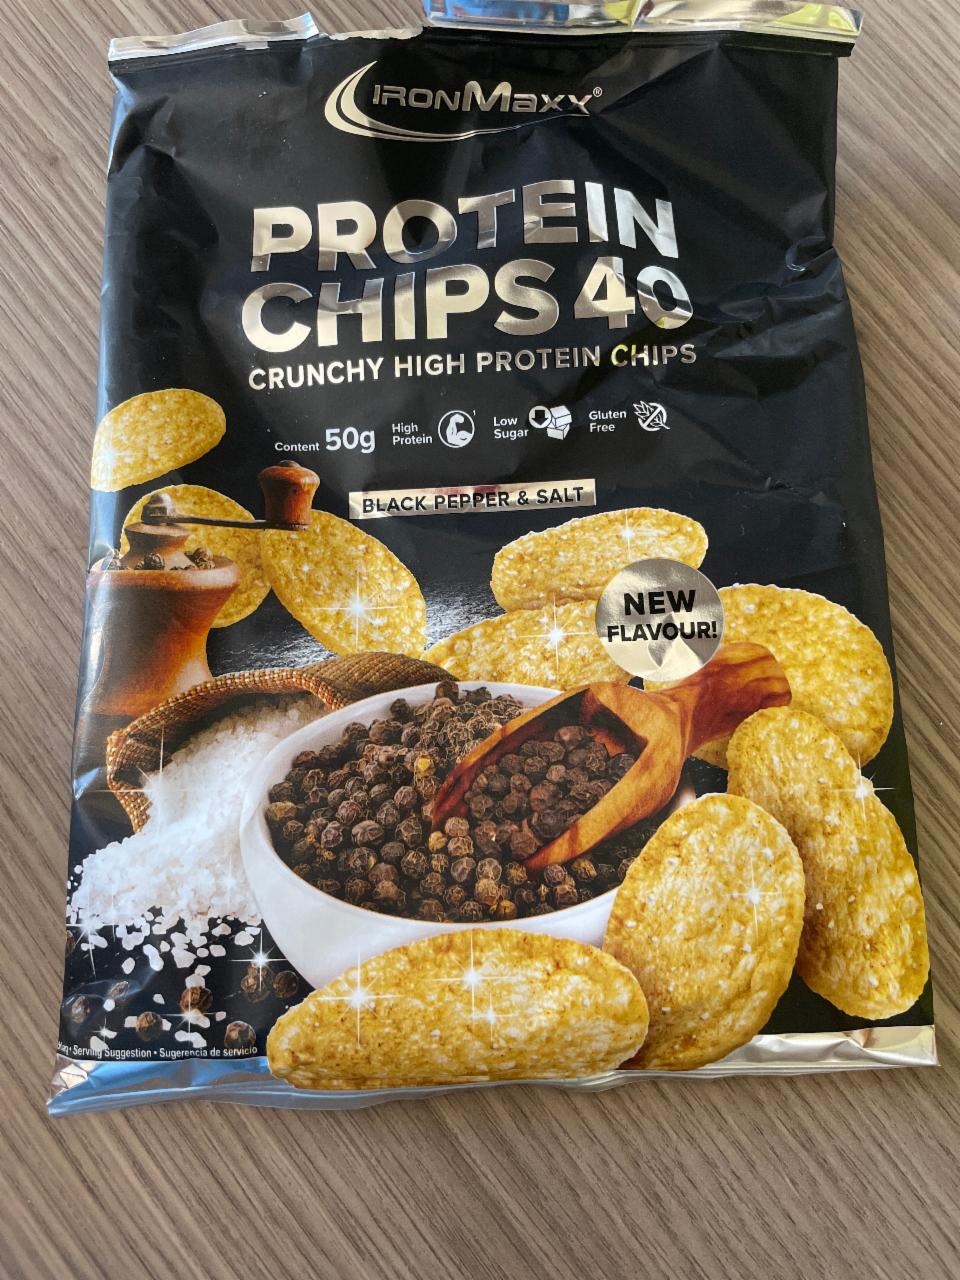 Fotografie - protein chips 40 black pepper & salt IronMaxx